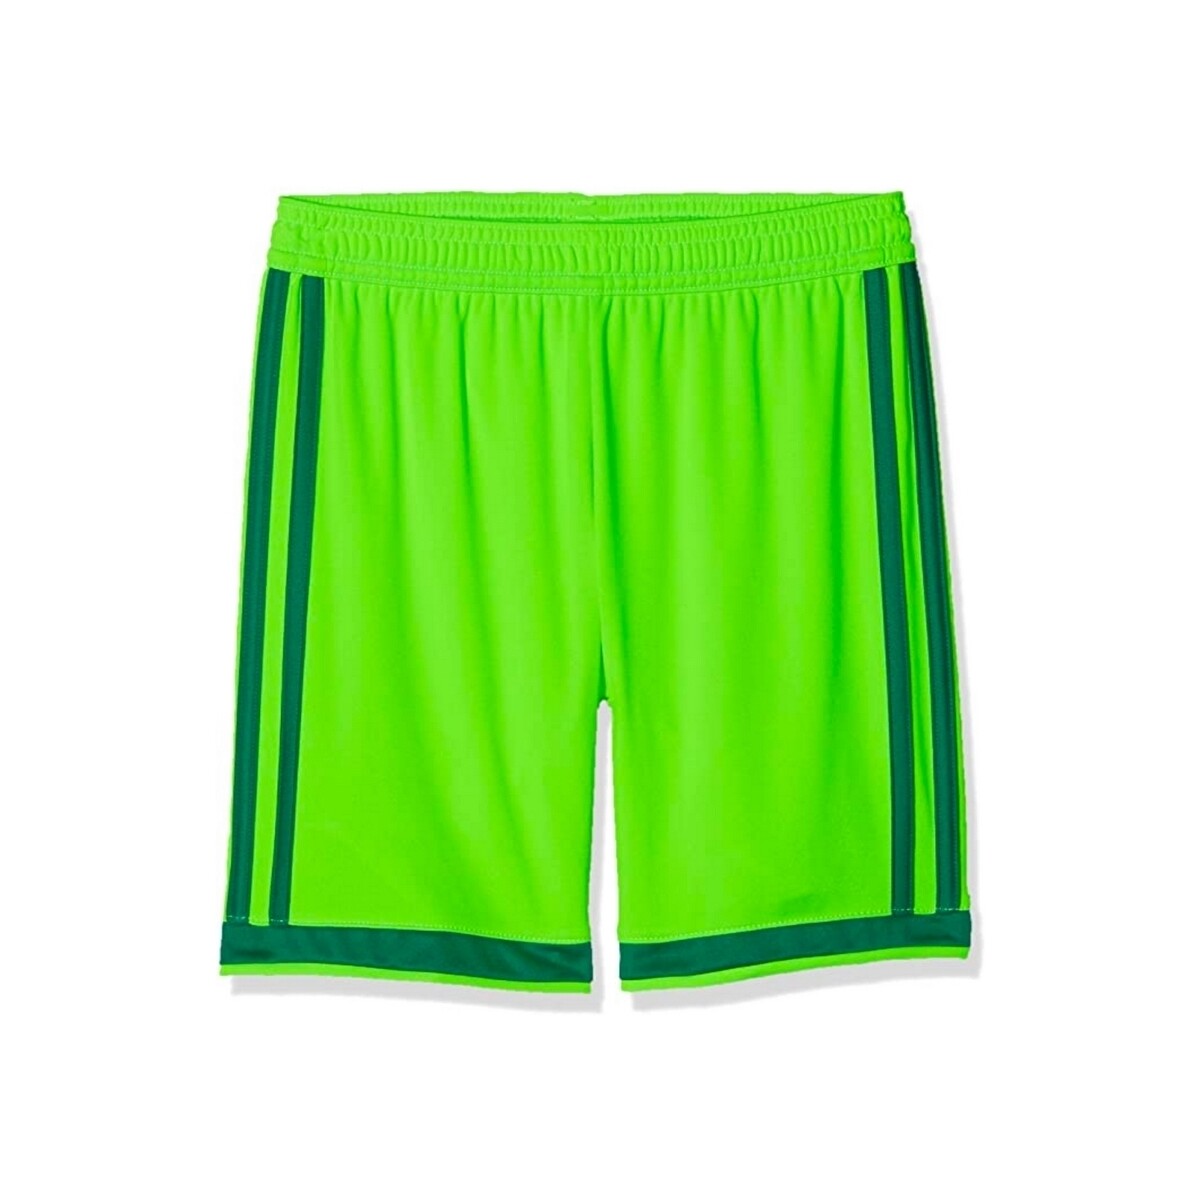 Kleidung Jungen Shorts / Bermudas adidas Originals CF9598-BIMBO Grün